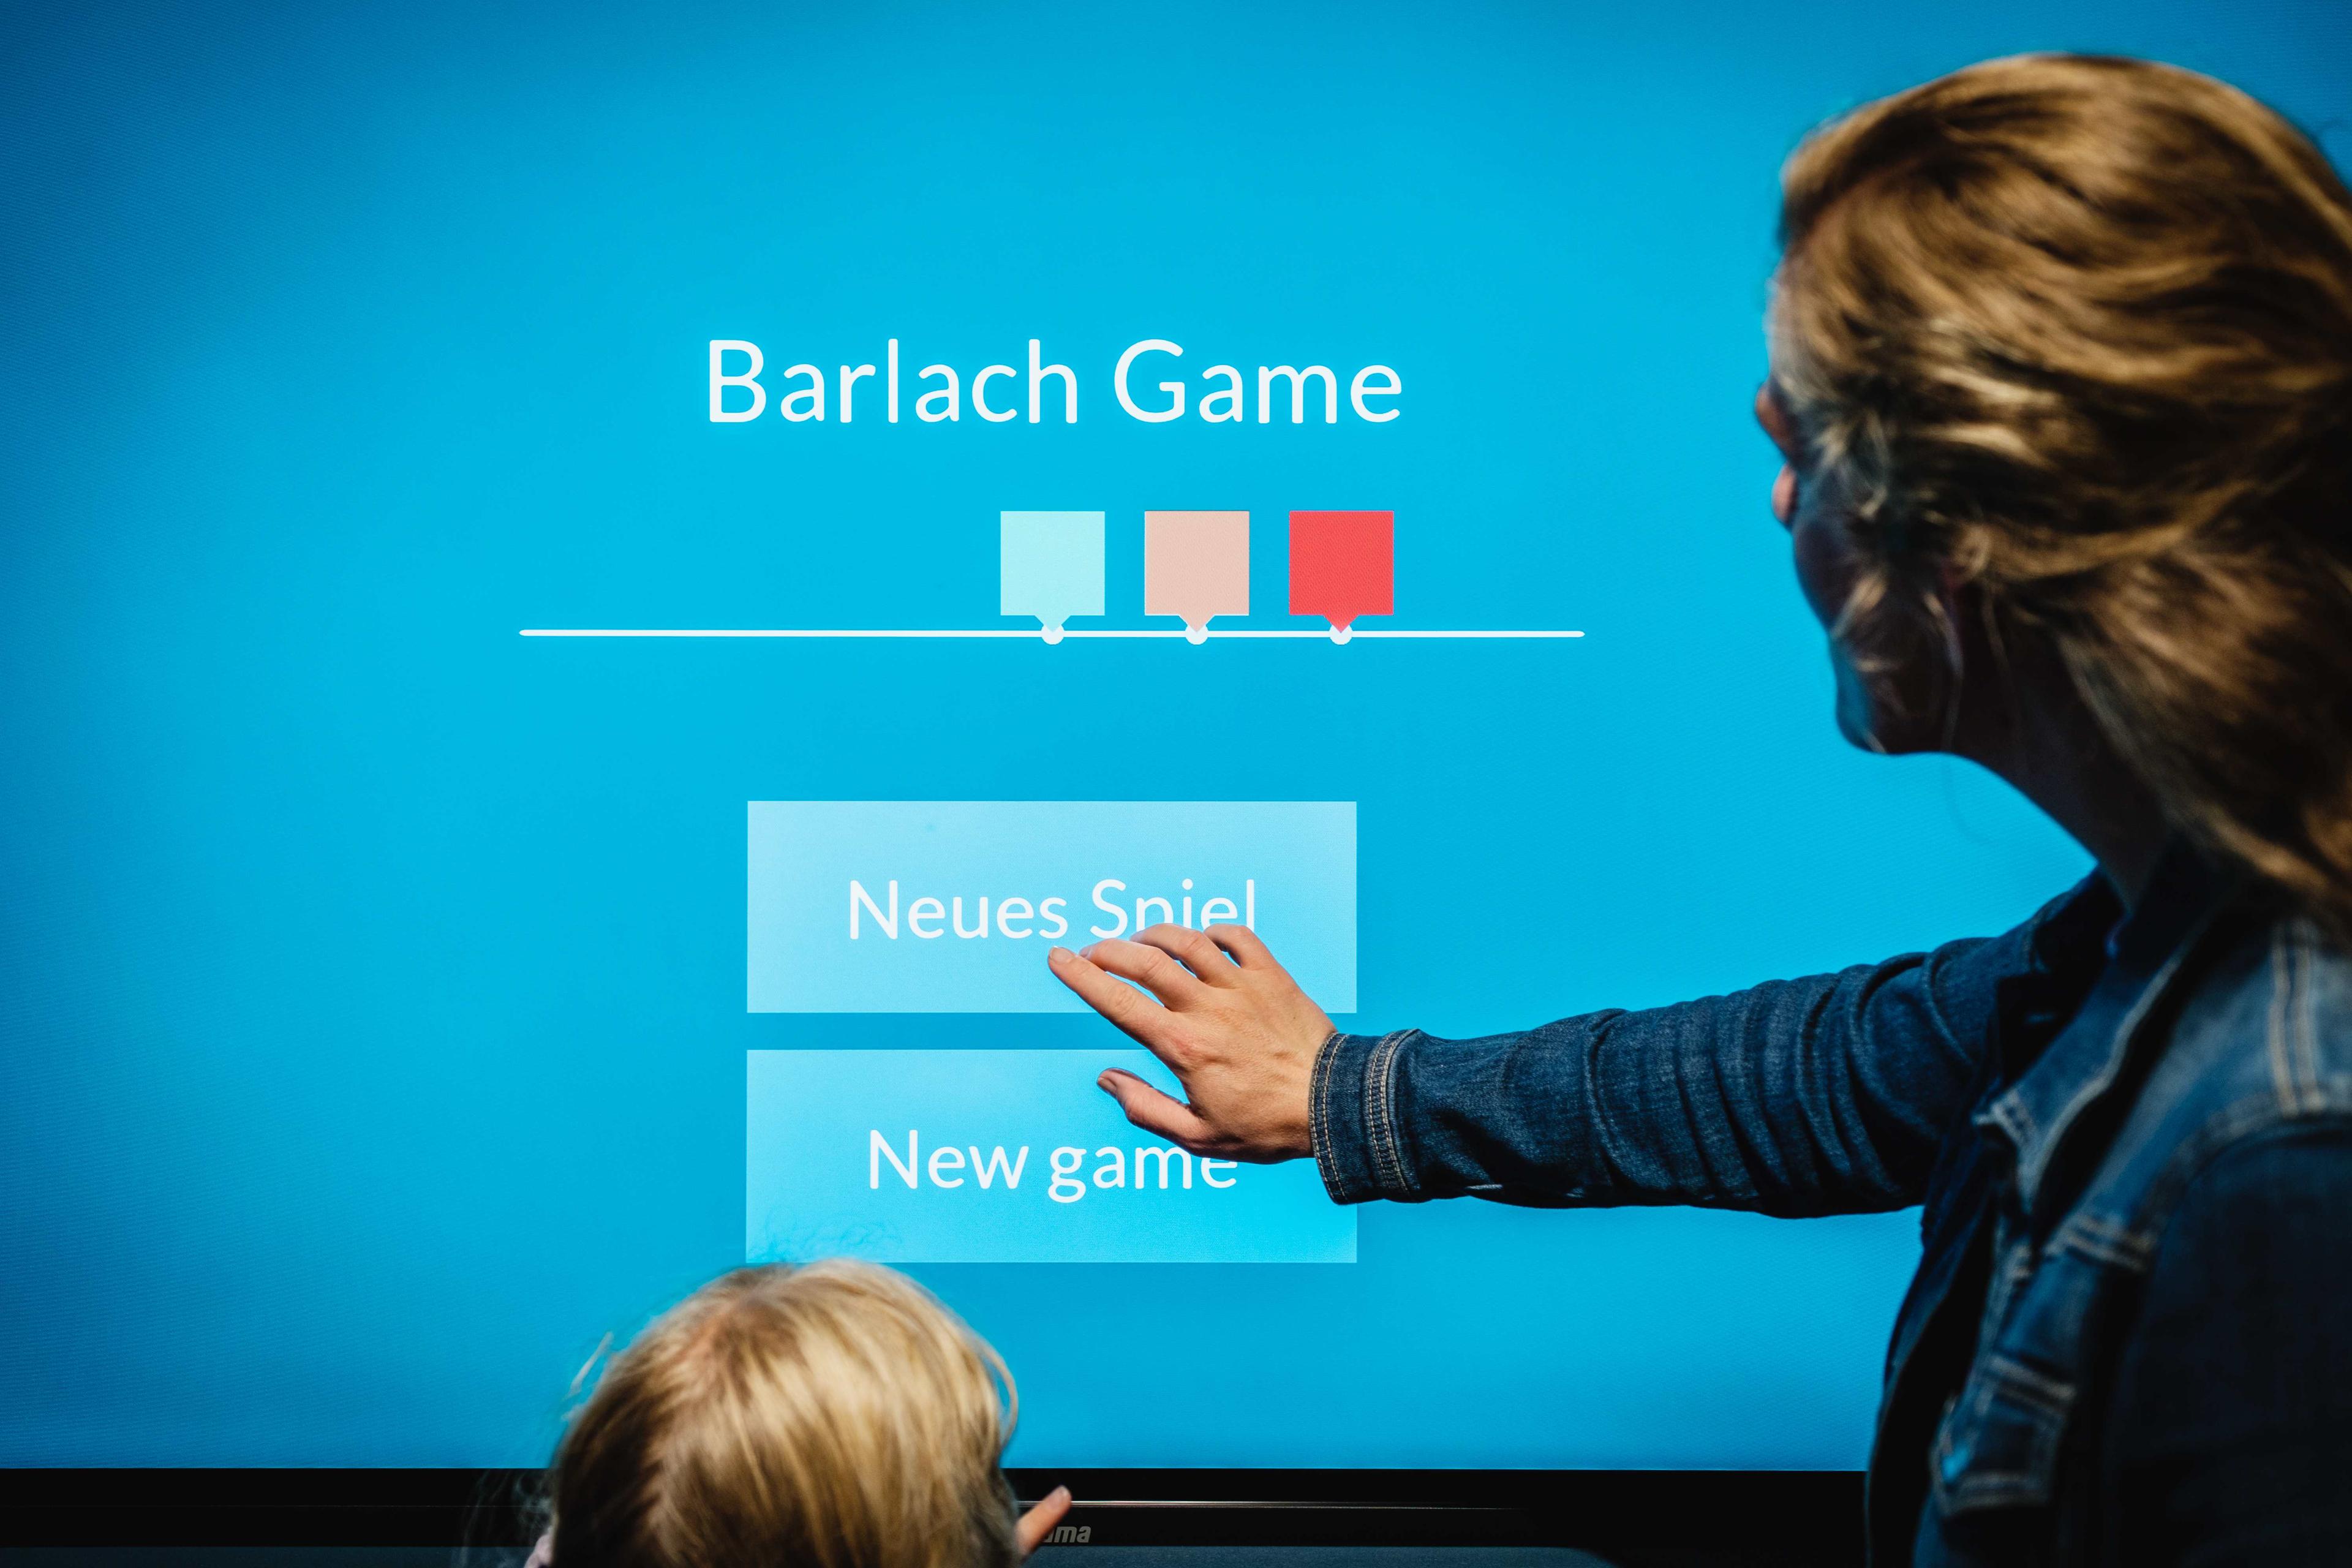 Frau wählt "Neues Spiel" im Barlach Game